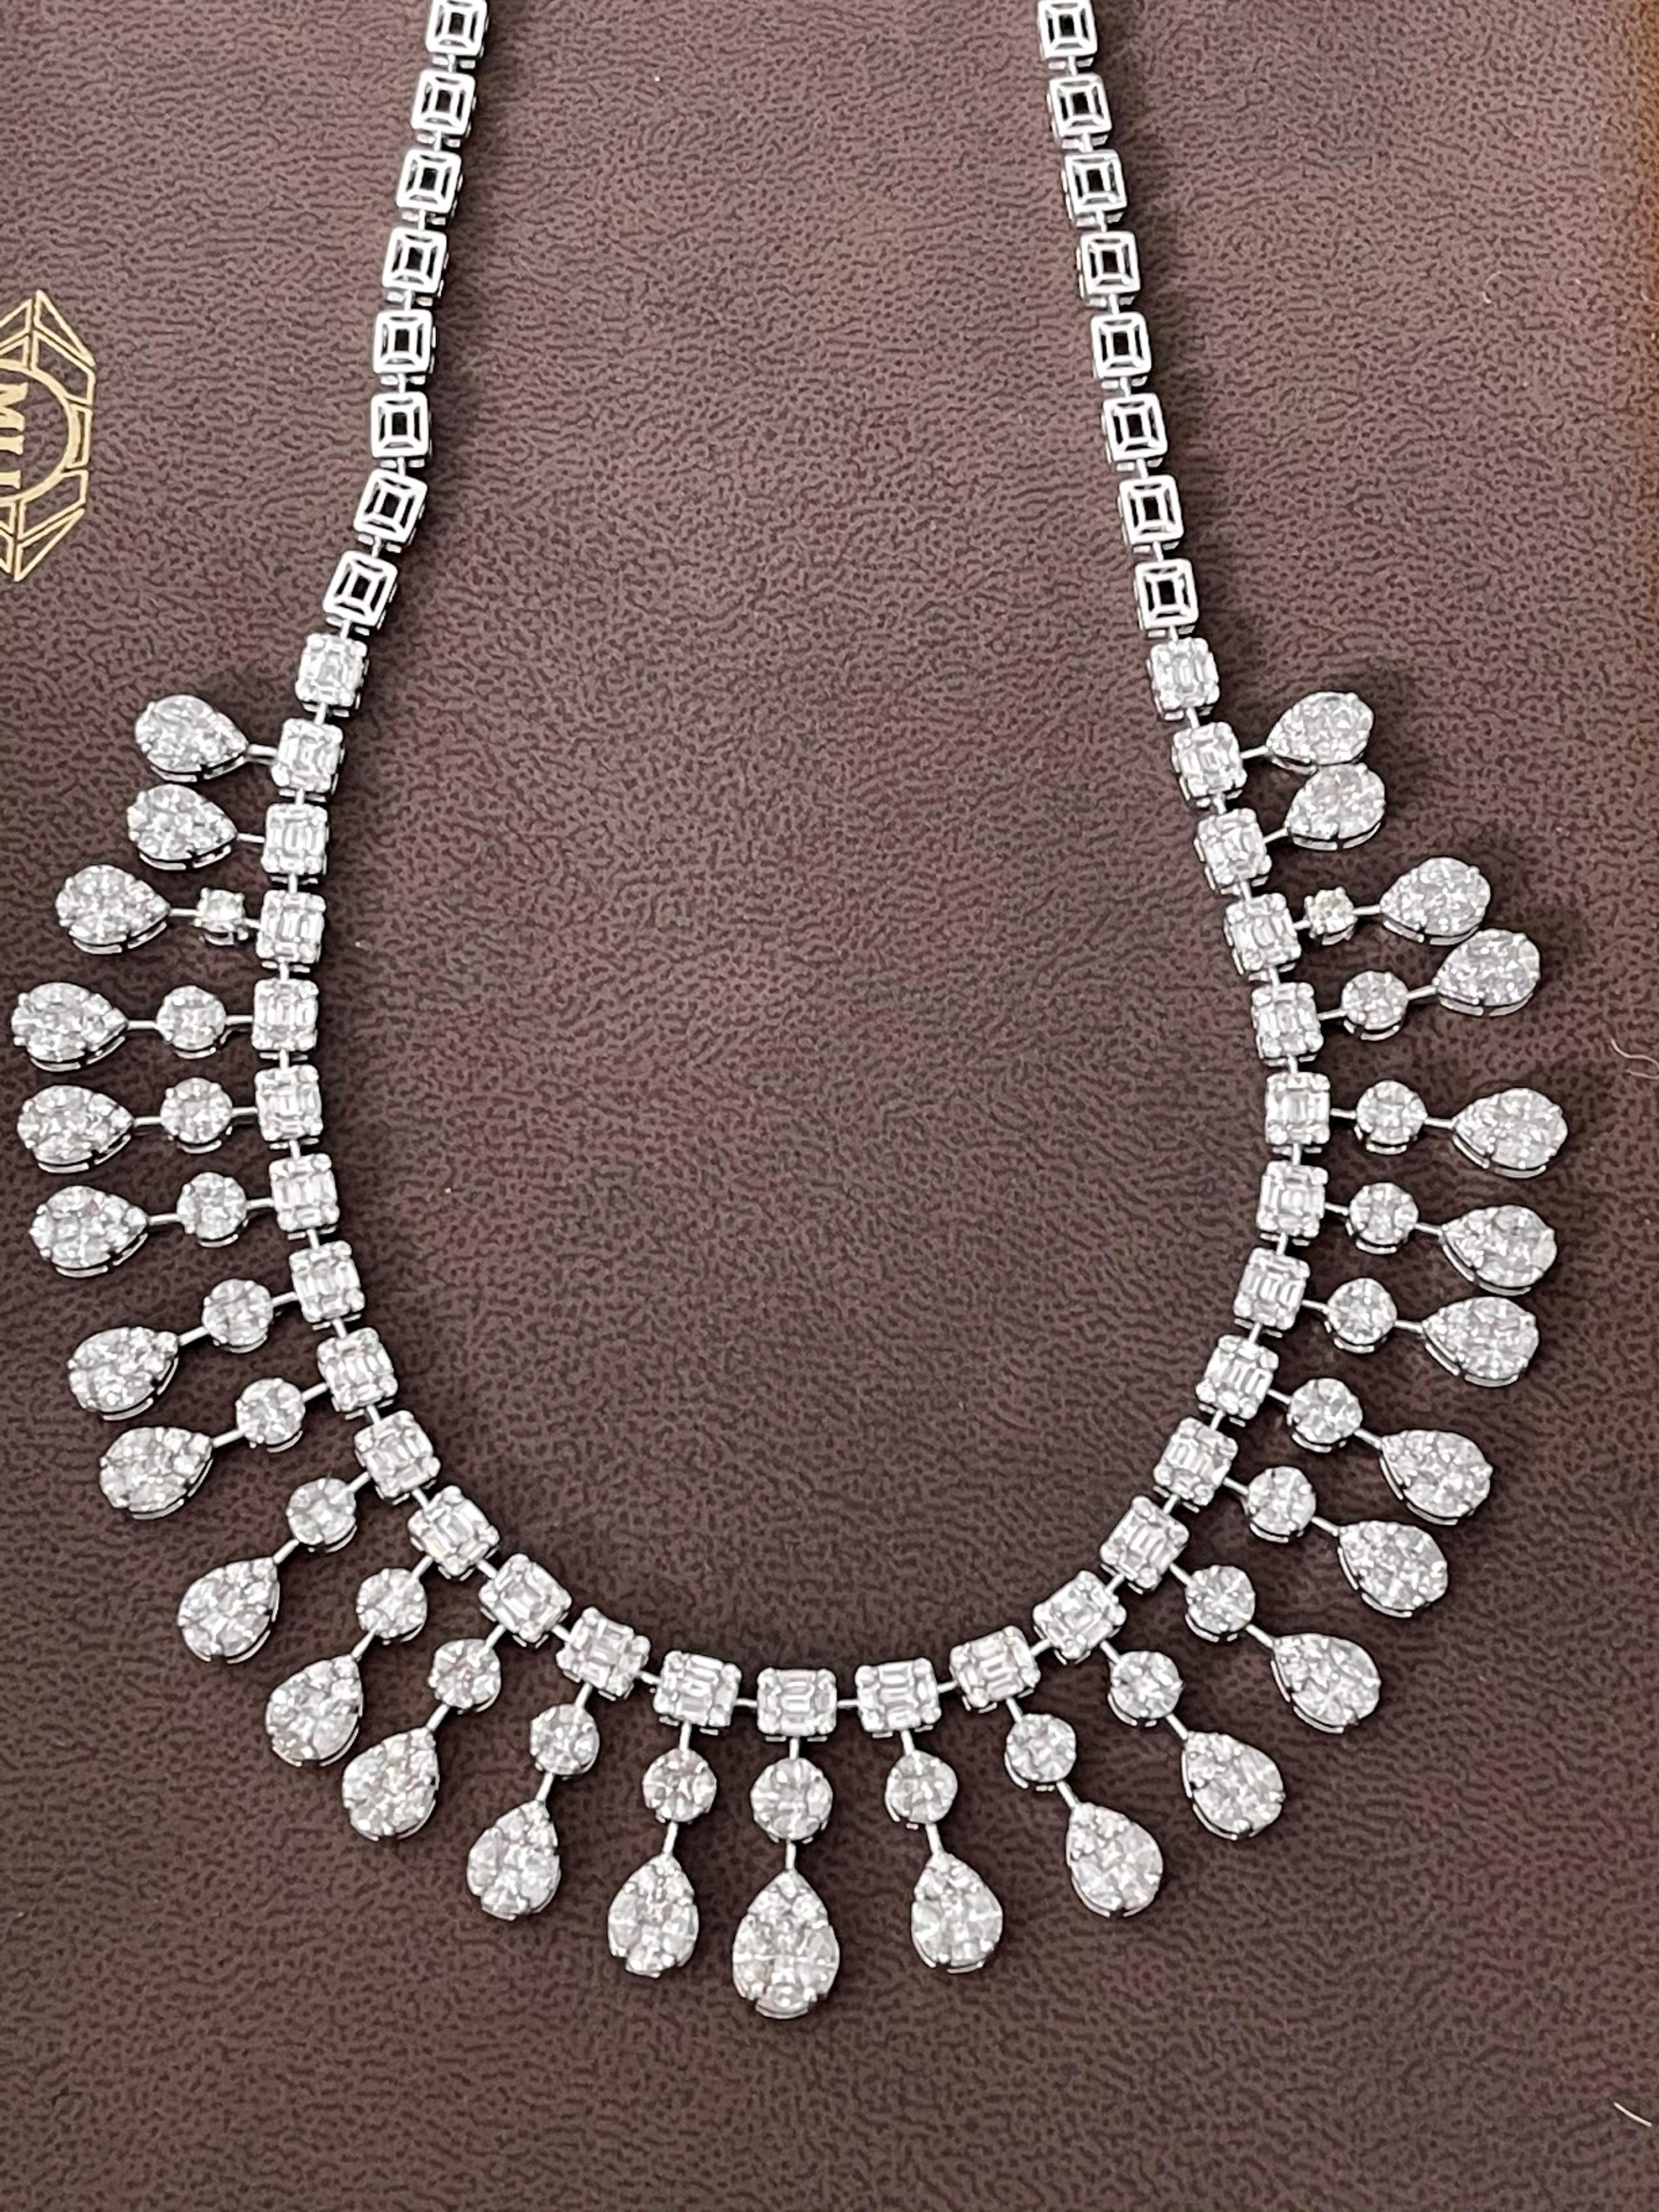 Elegant Dangling 32 Carat Diamond Necklace and Earring Suite in 18 Karat Gold 10